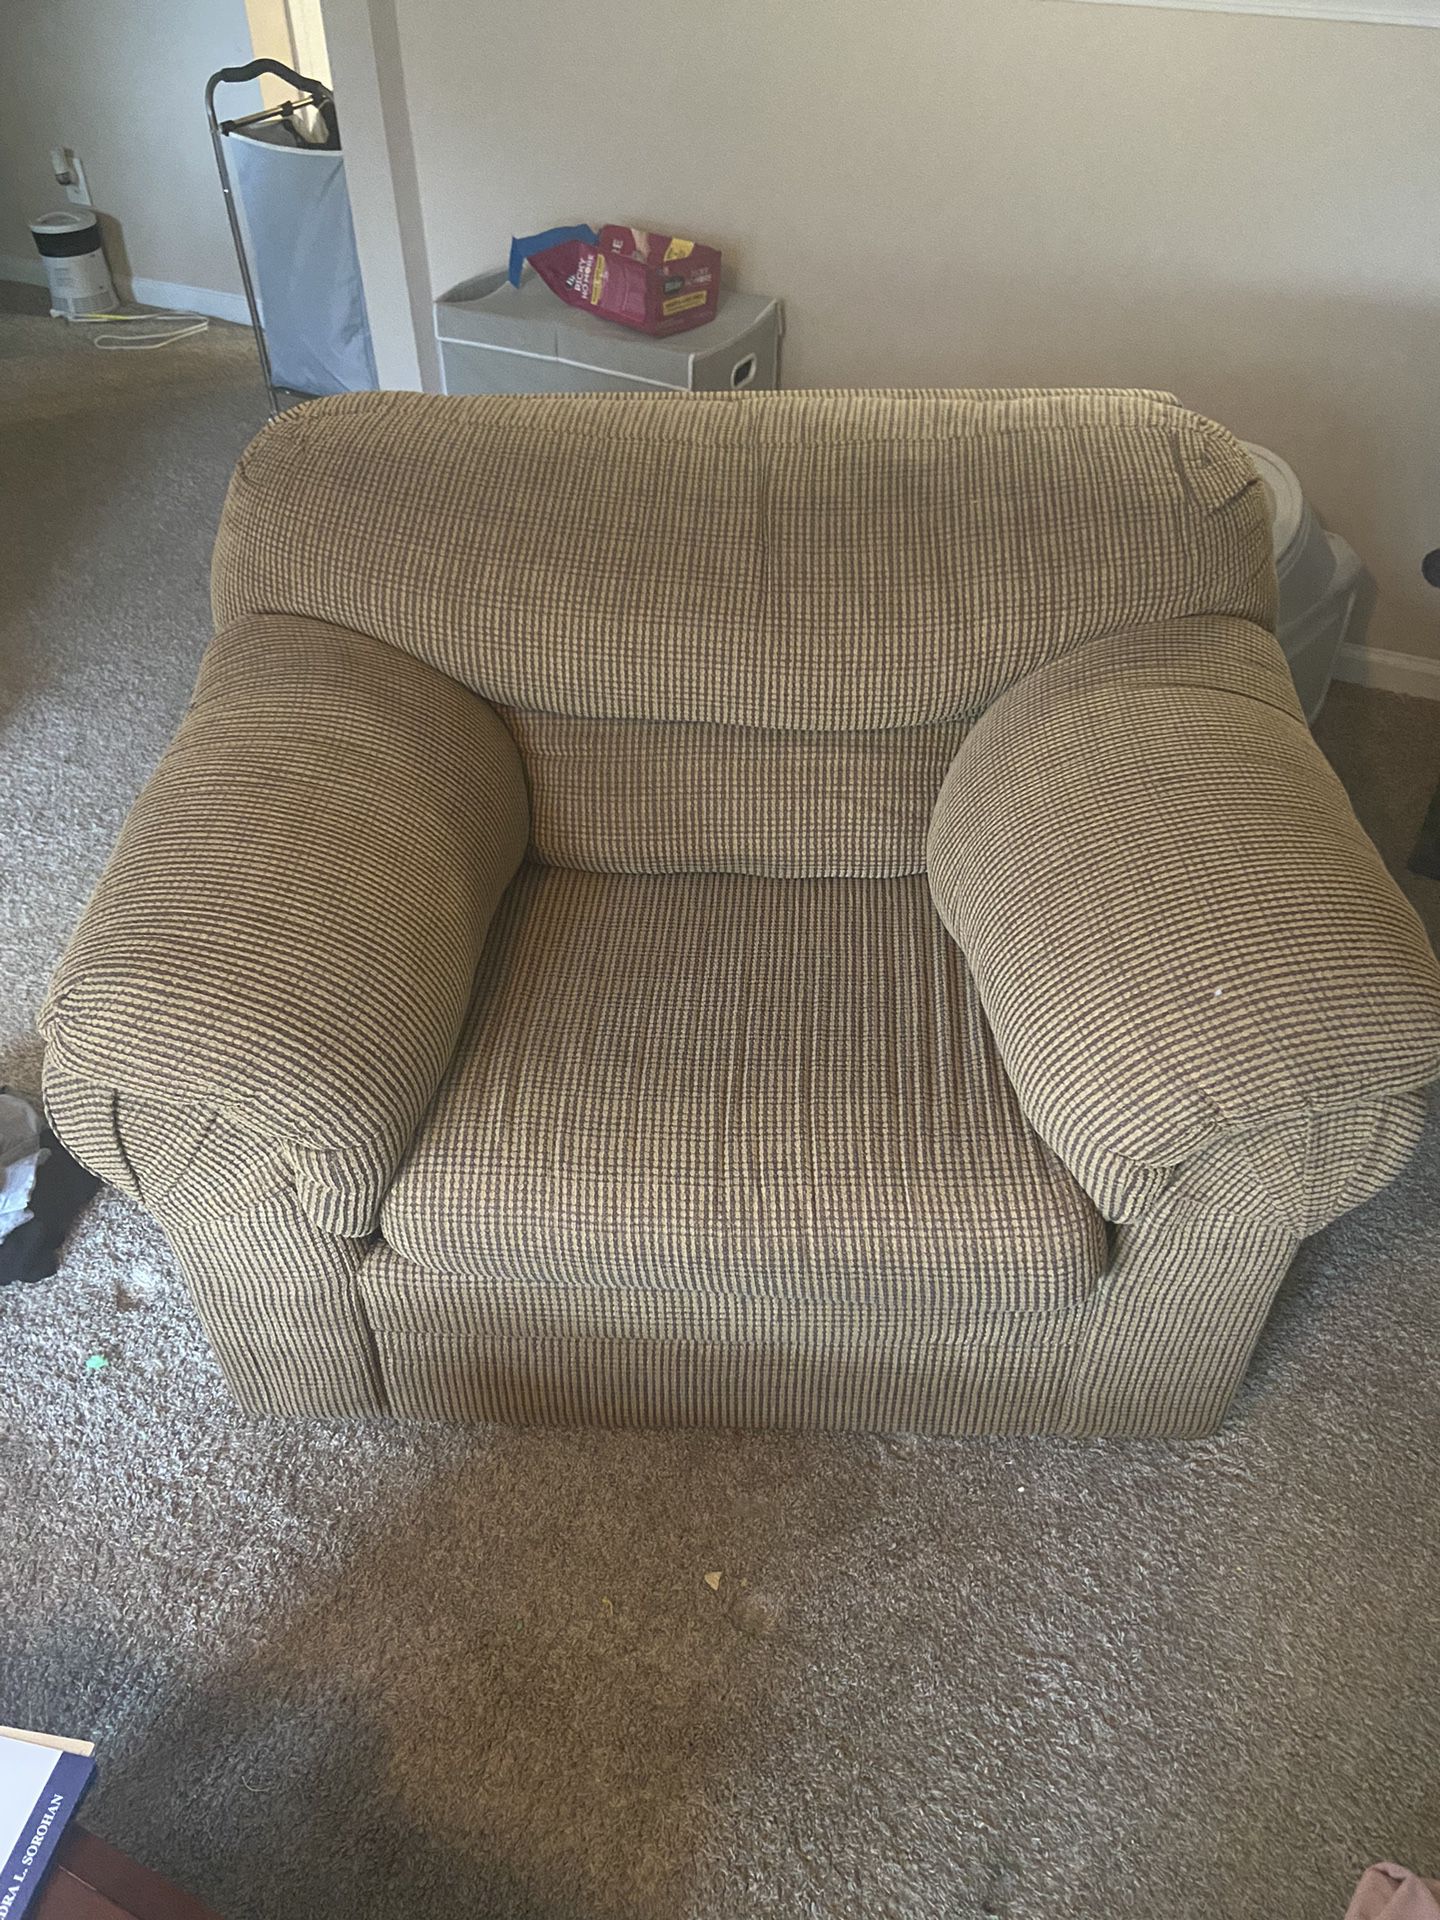 Clean 3 Piece Couch Set